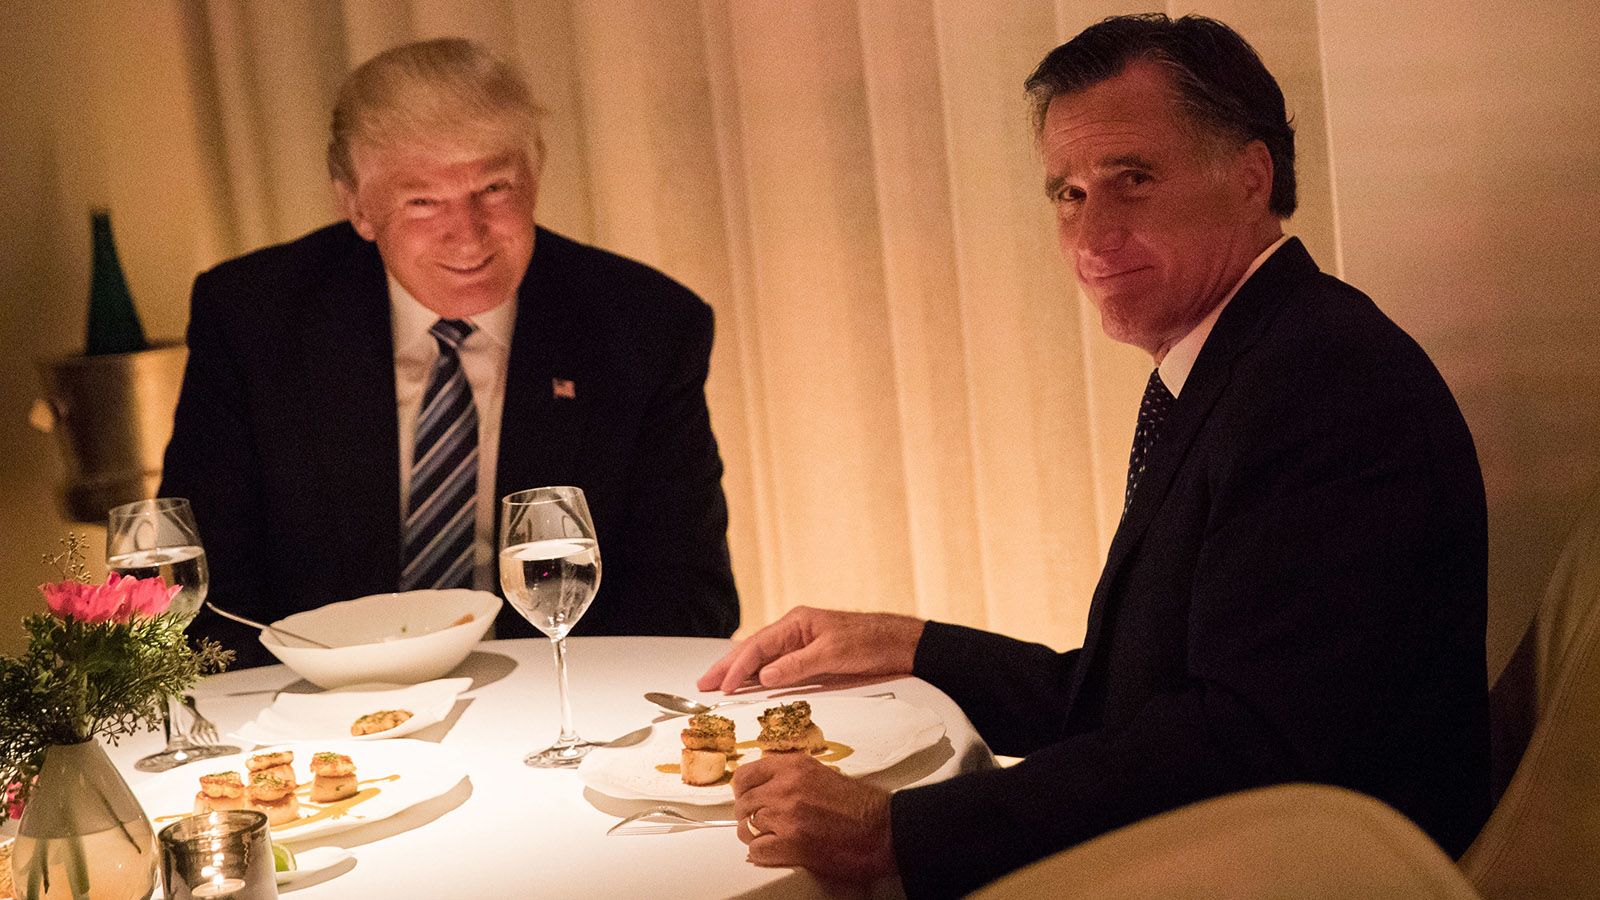 Inside Trump and Romney's Jean Georges dinner | CNN Politics